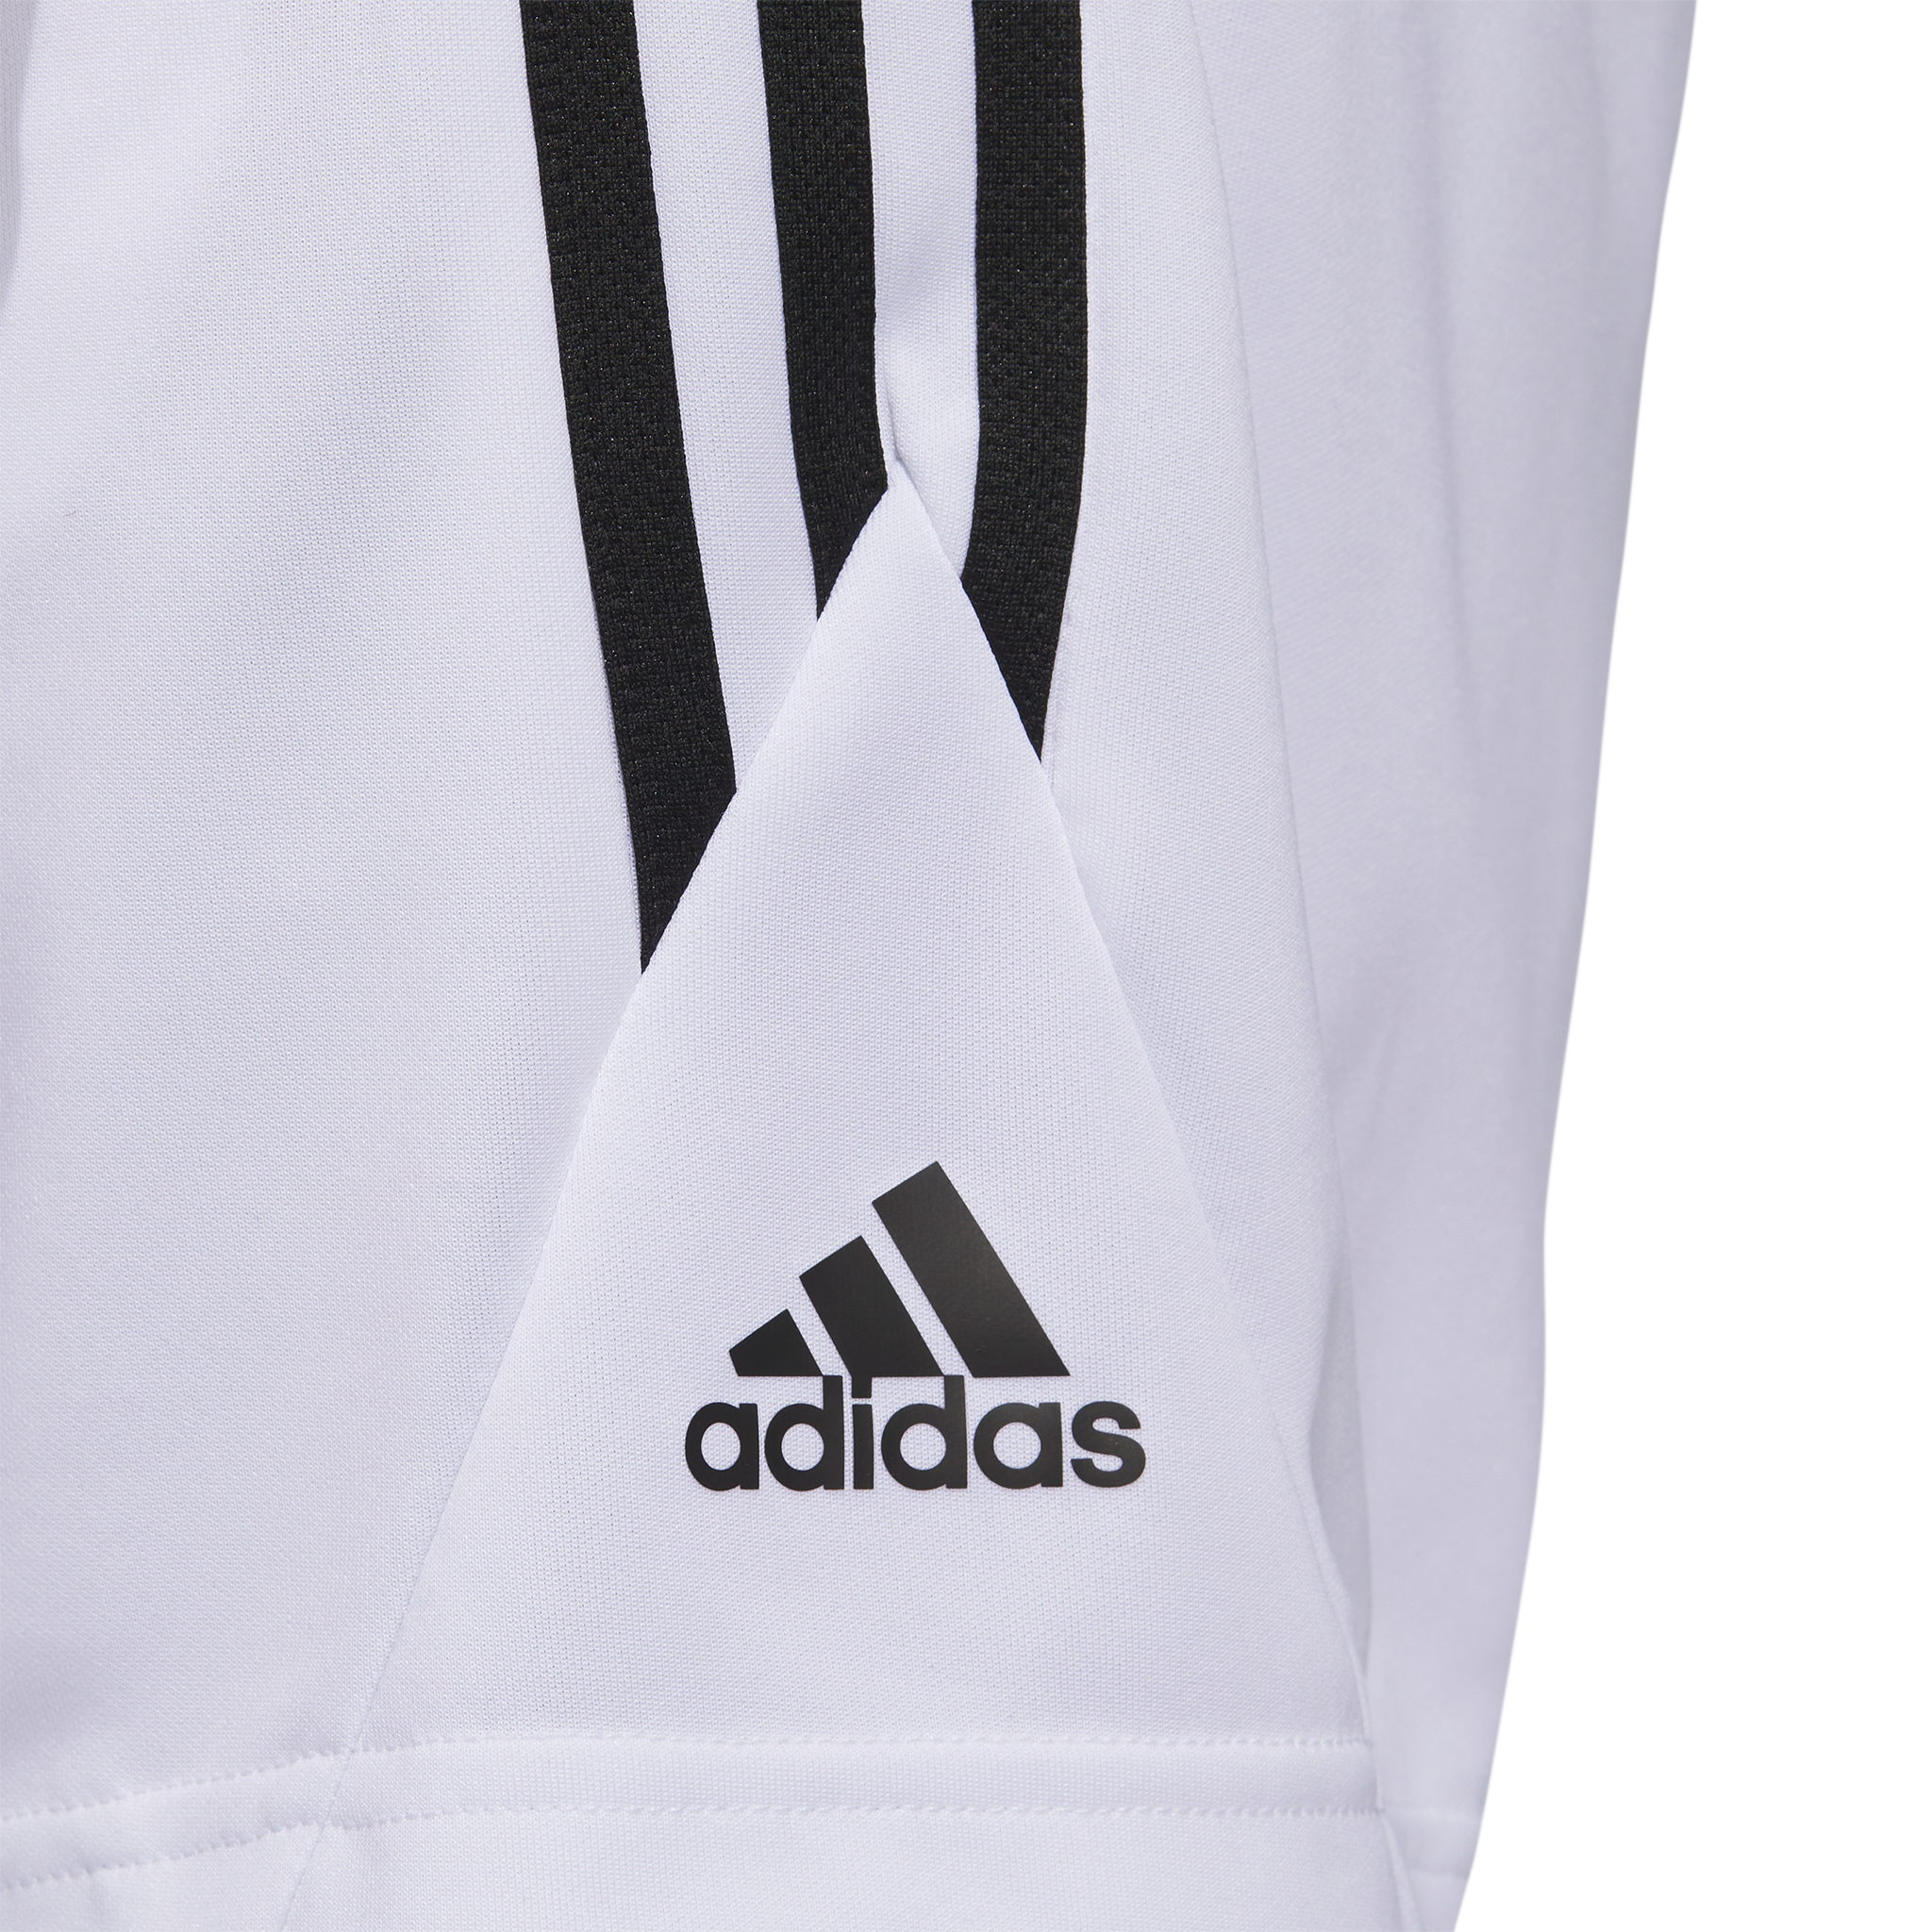 Adidas Legends 3 Stripes Mens Basketball Shorts